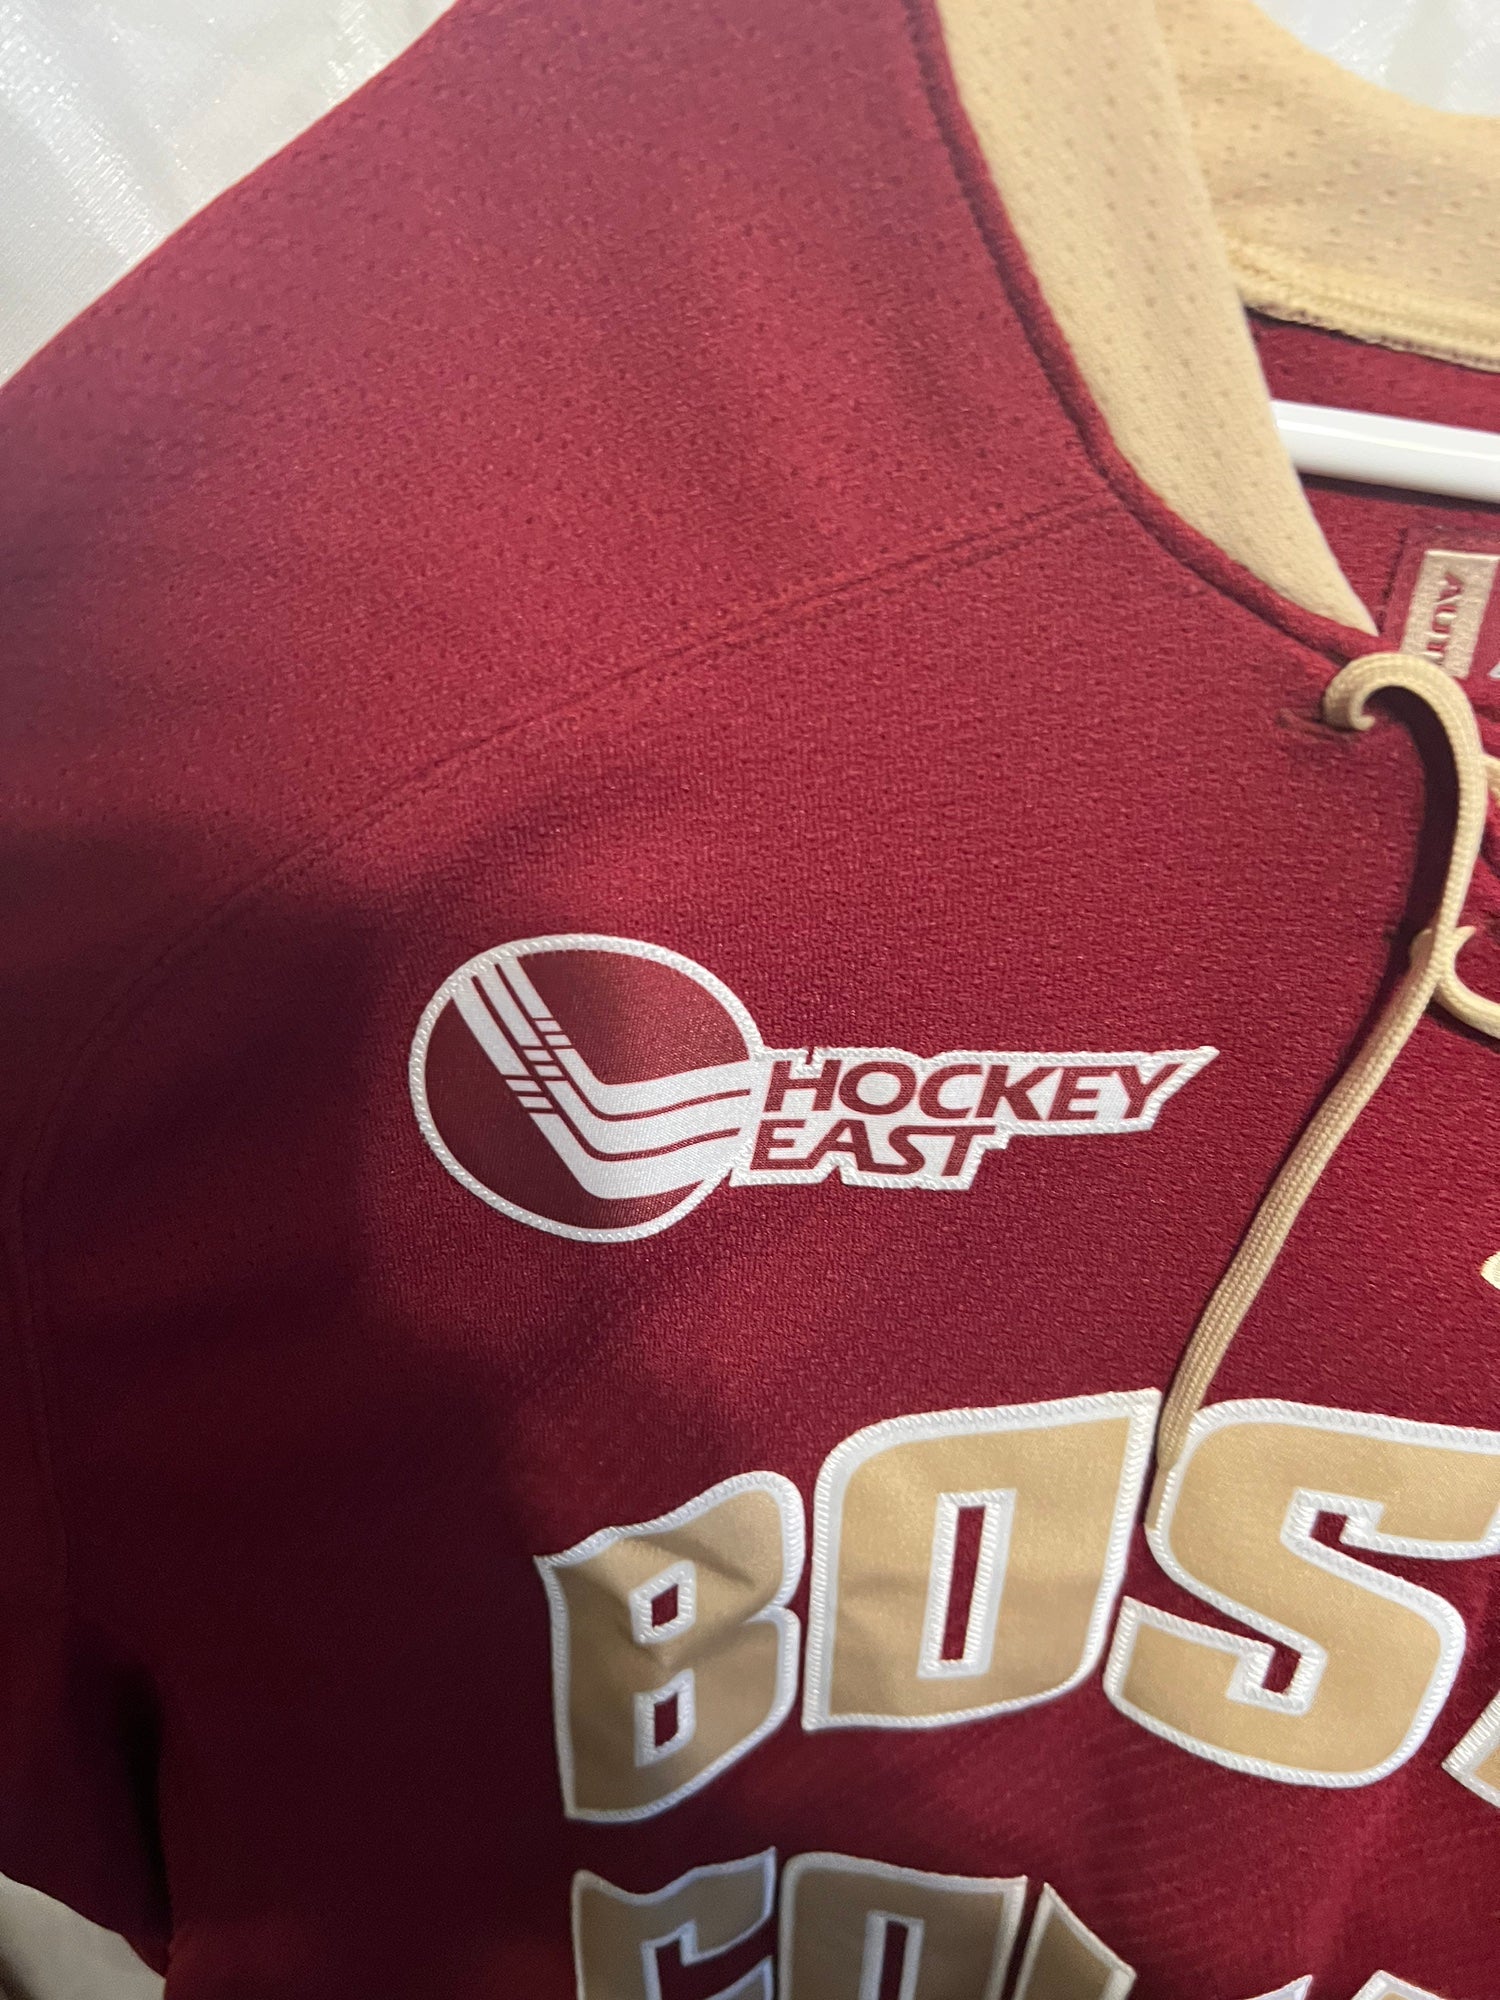 boston college hockey uniforms